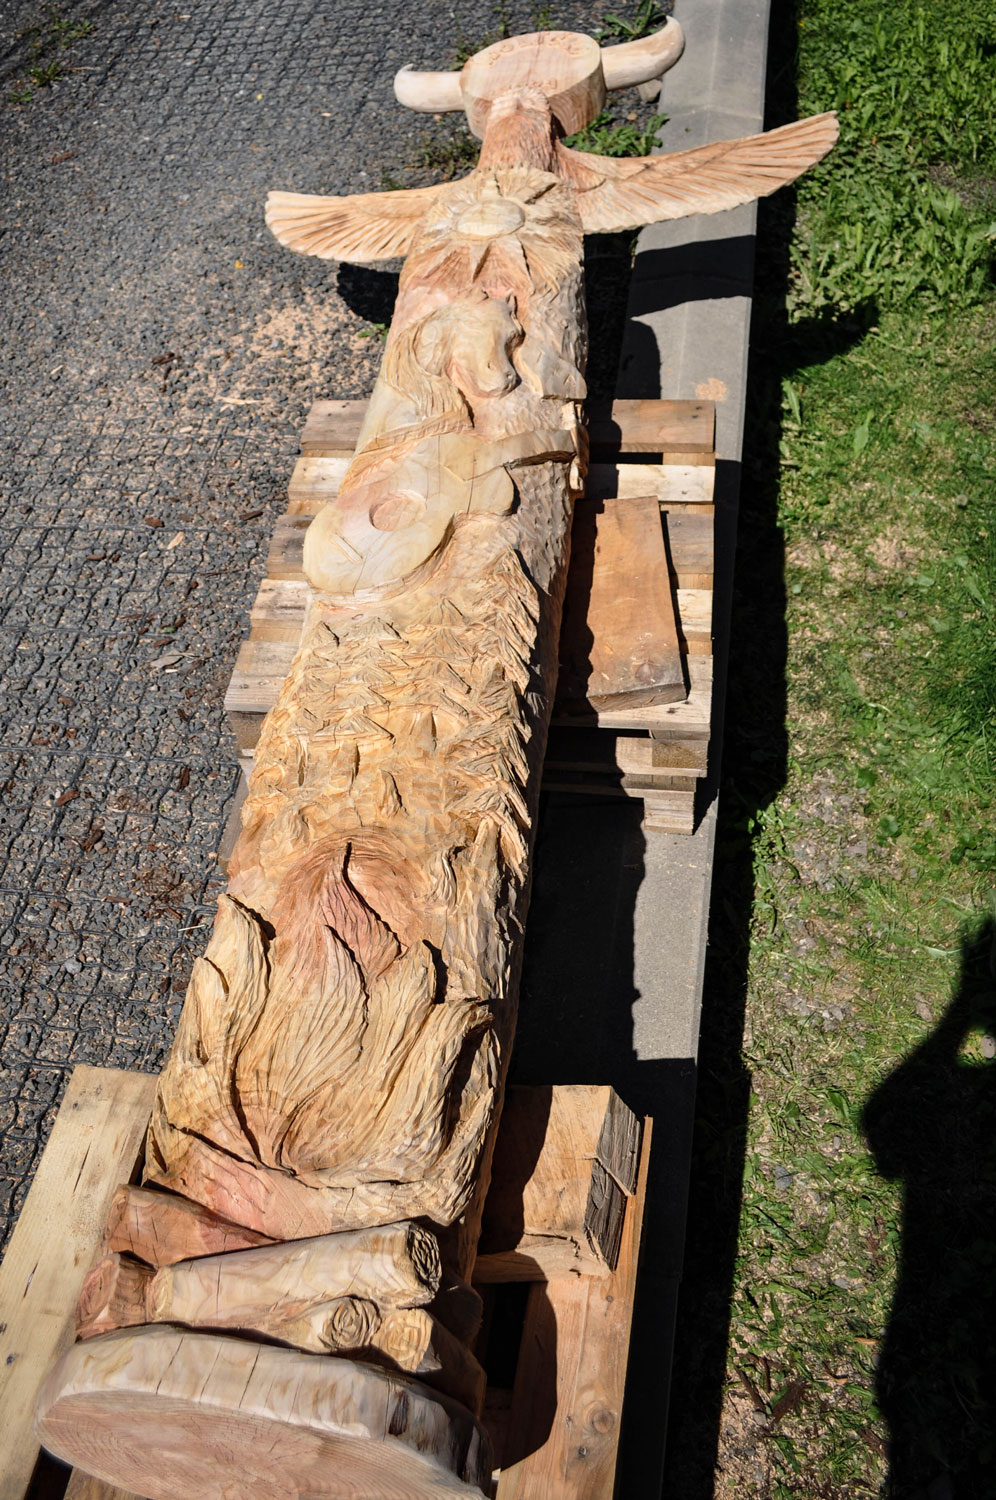 drevorezba-vyrezavani-carving-wood-drevo-socha-totem_3m-radekzdrazil-20210811-02